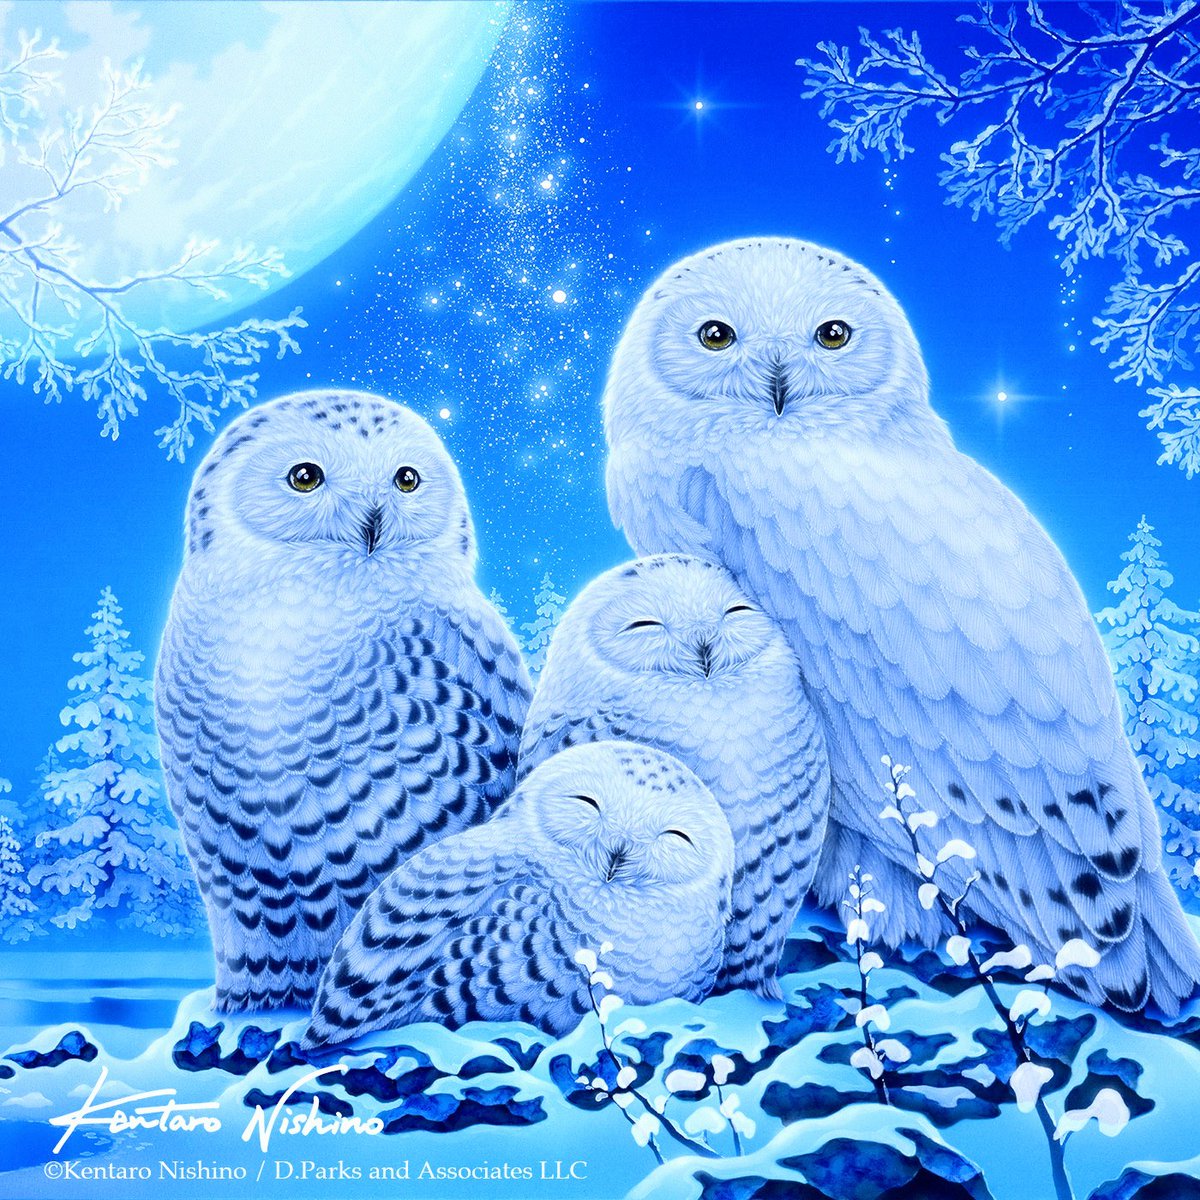 'My Little Angels' #snowyowl, Acrylic on canvas

「愛しき天使たち」#シロフクロウ、アクリル、キャンバス

#kentaronishino #saveowls #owls #owlart #family #moon #moonart # 月 #家族 #フクロウ #フクロウアート #西野健太郎